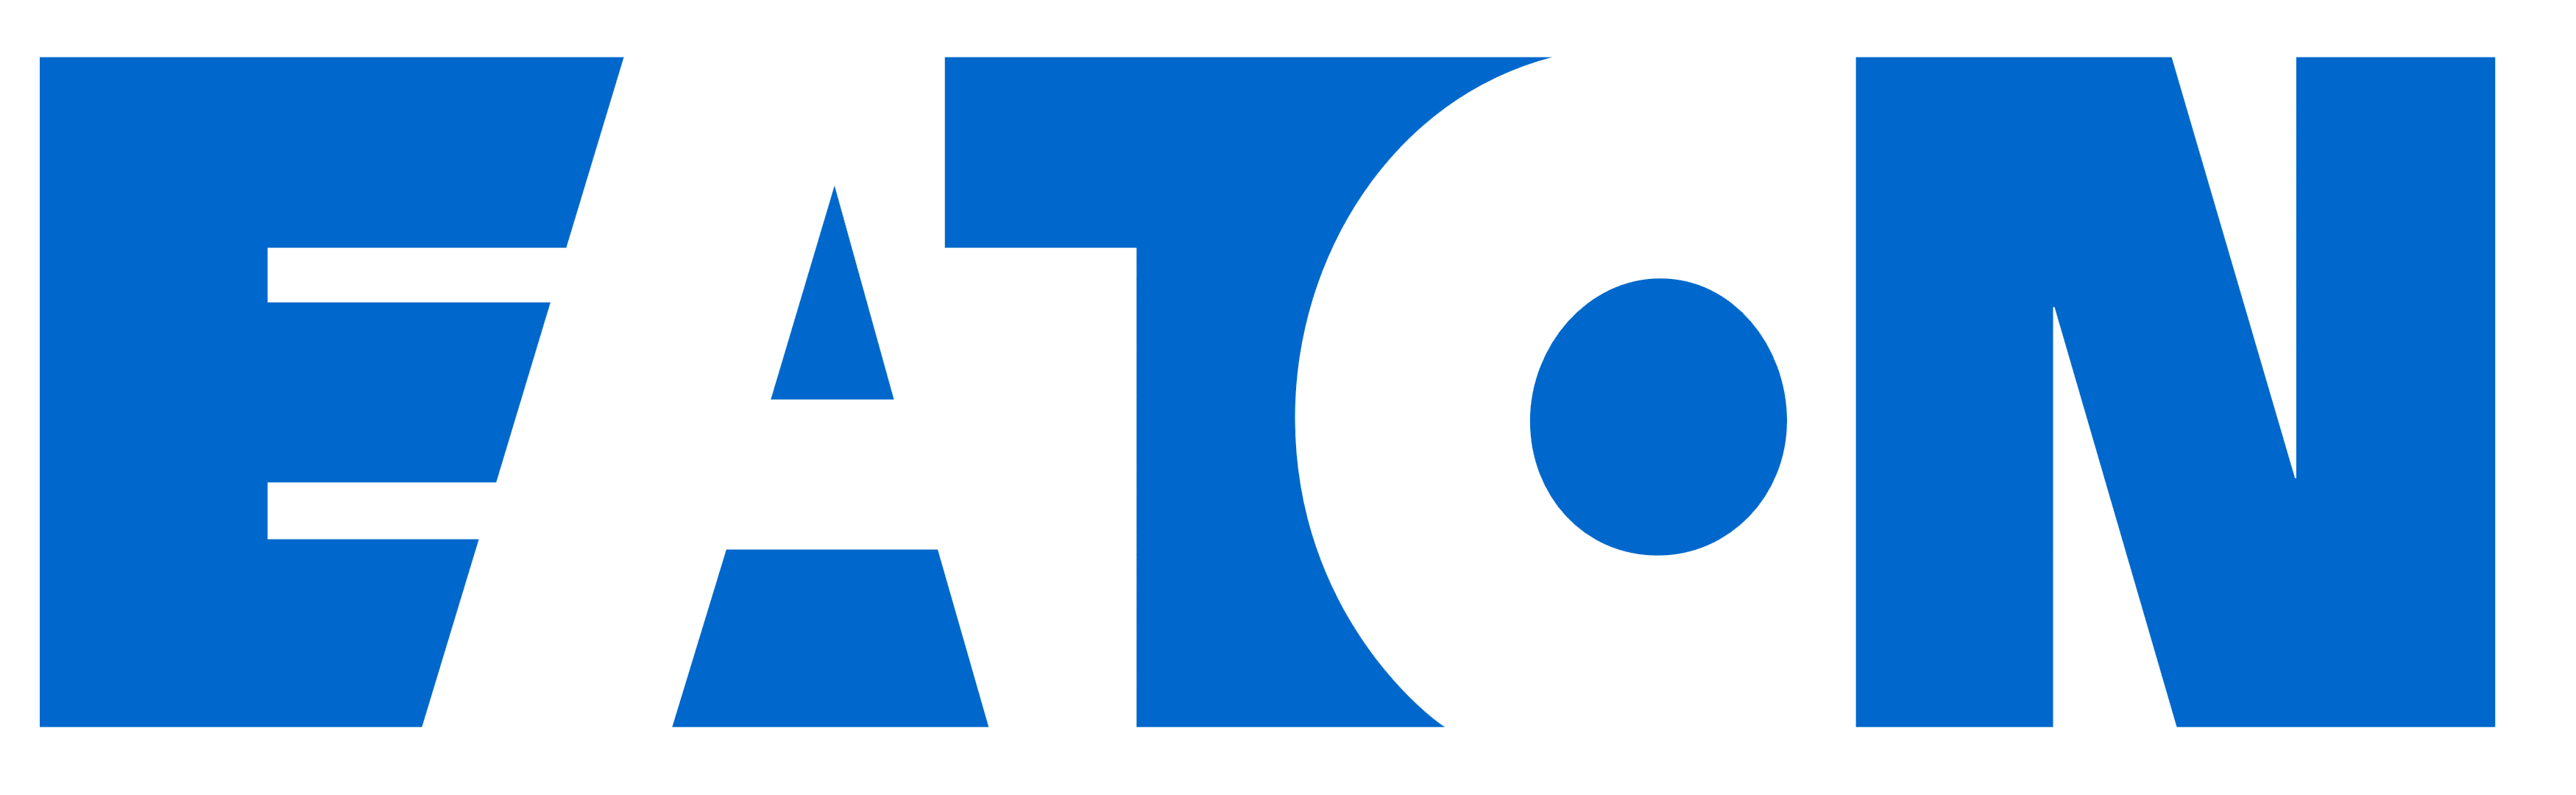 eaton Logo